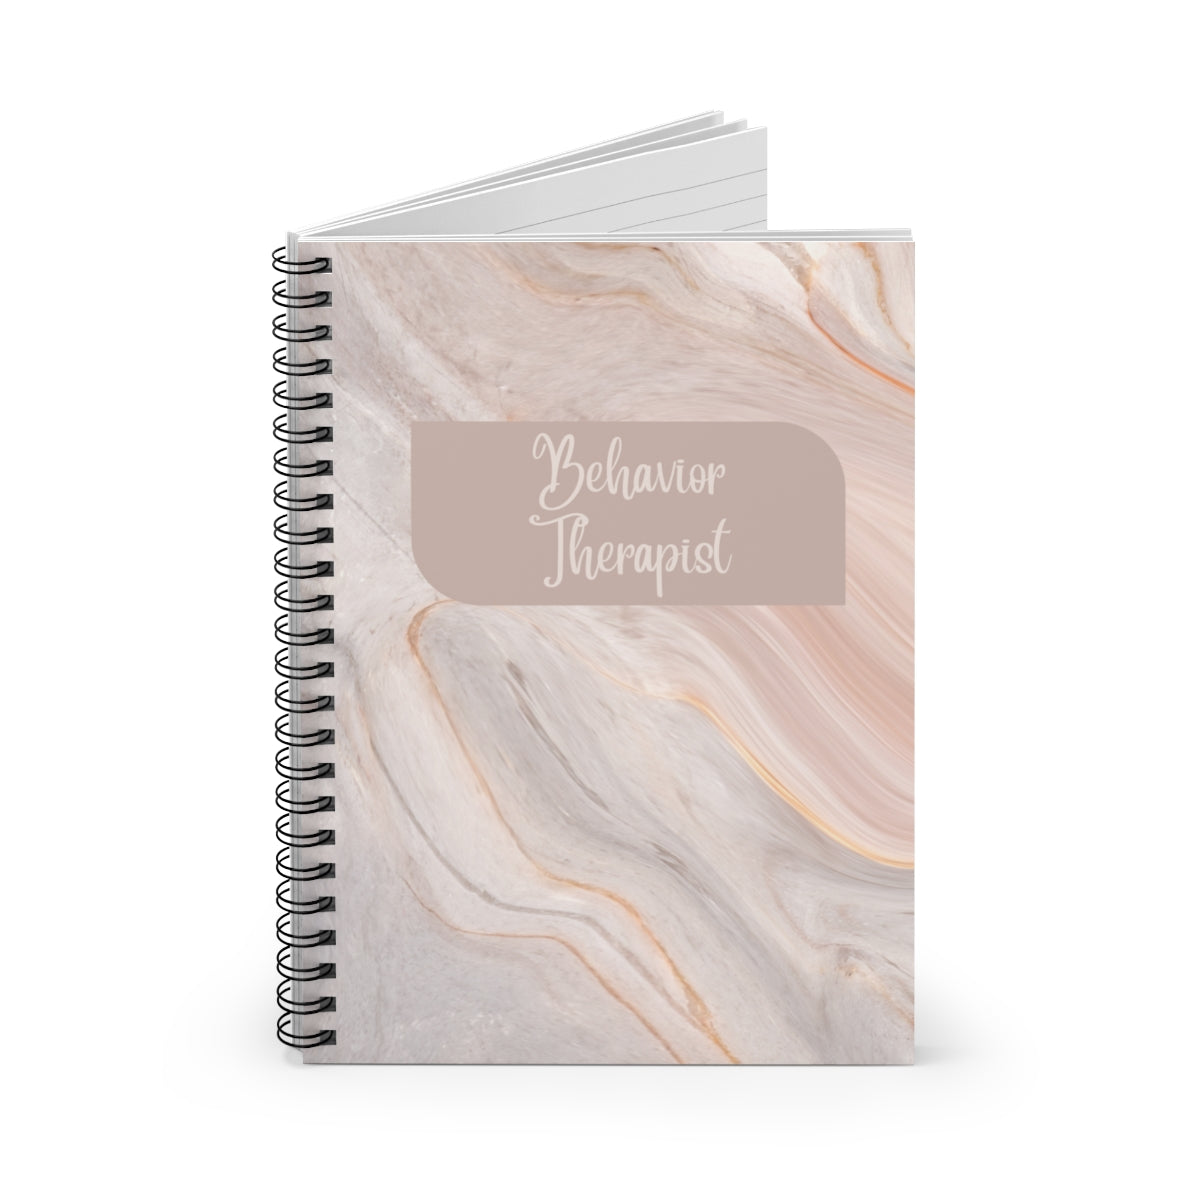 Behavior Analyst Marble Spiral Notebook - Ruled Line